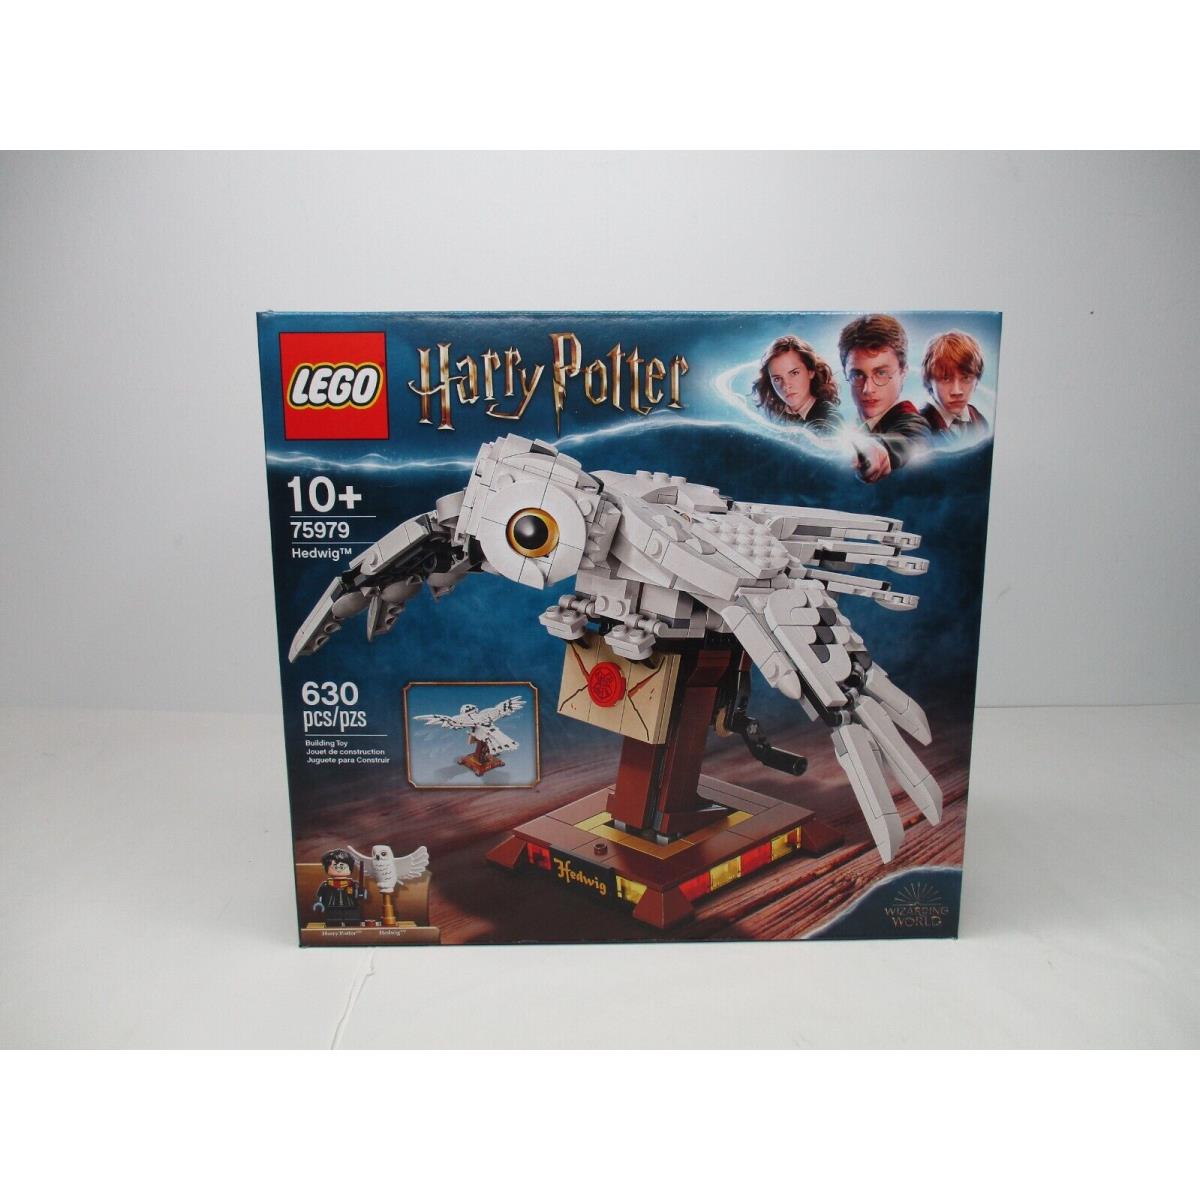 Lego Harry Potter Hedwig Owl Retired Set 75979 630 Pcs